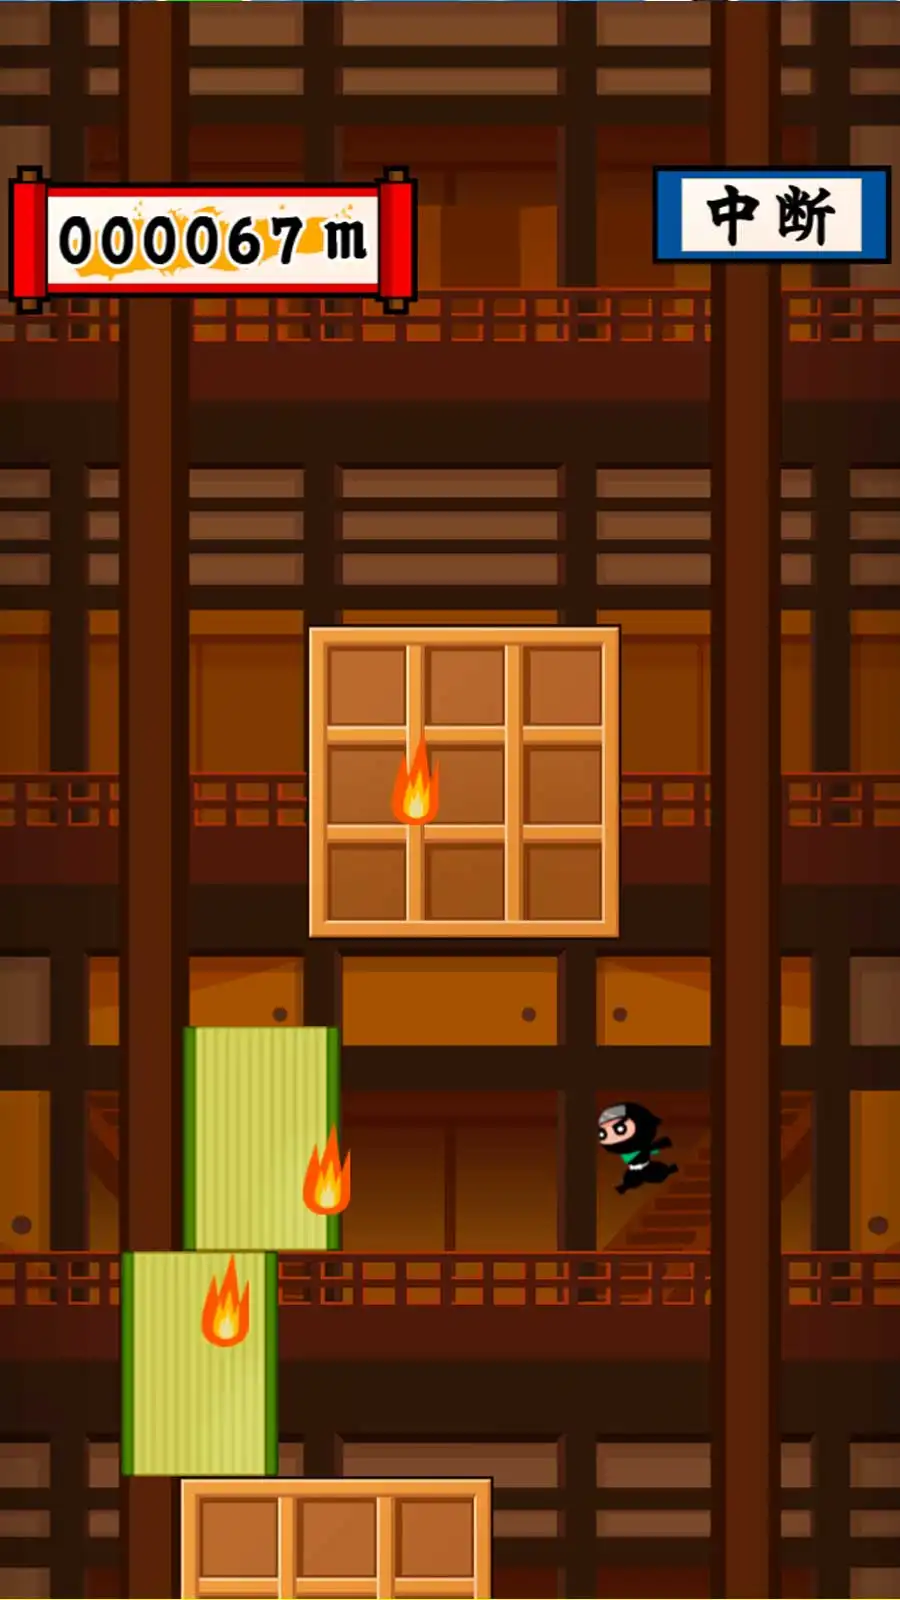 Ninja Jump Screen Shot 1